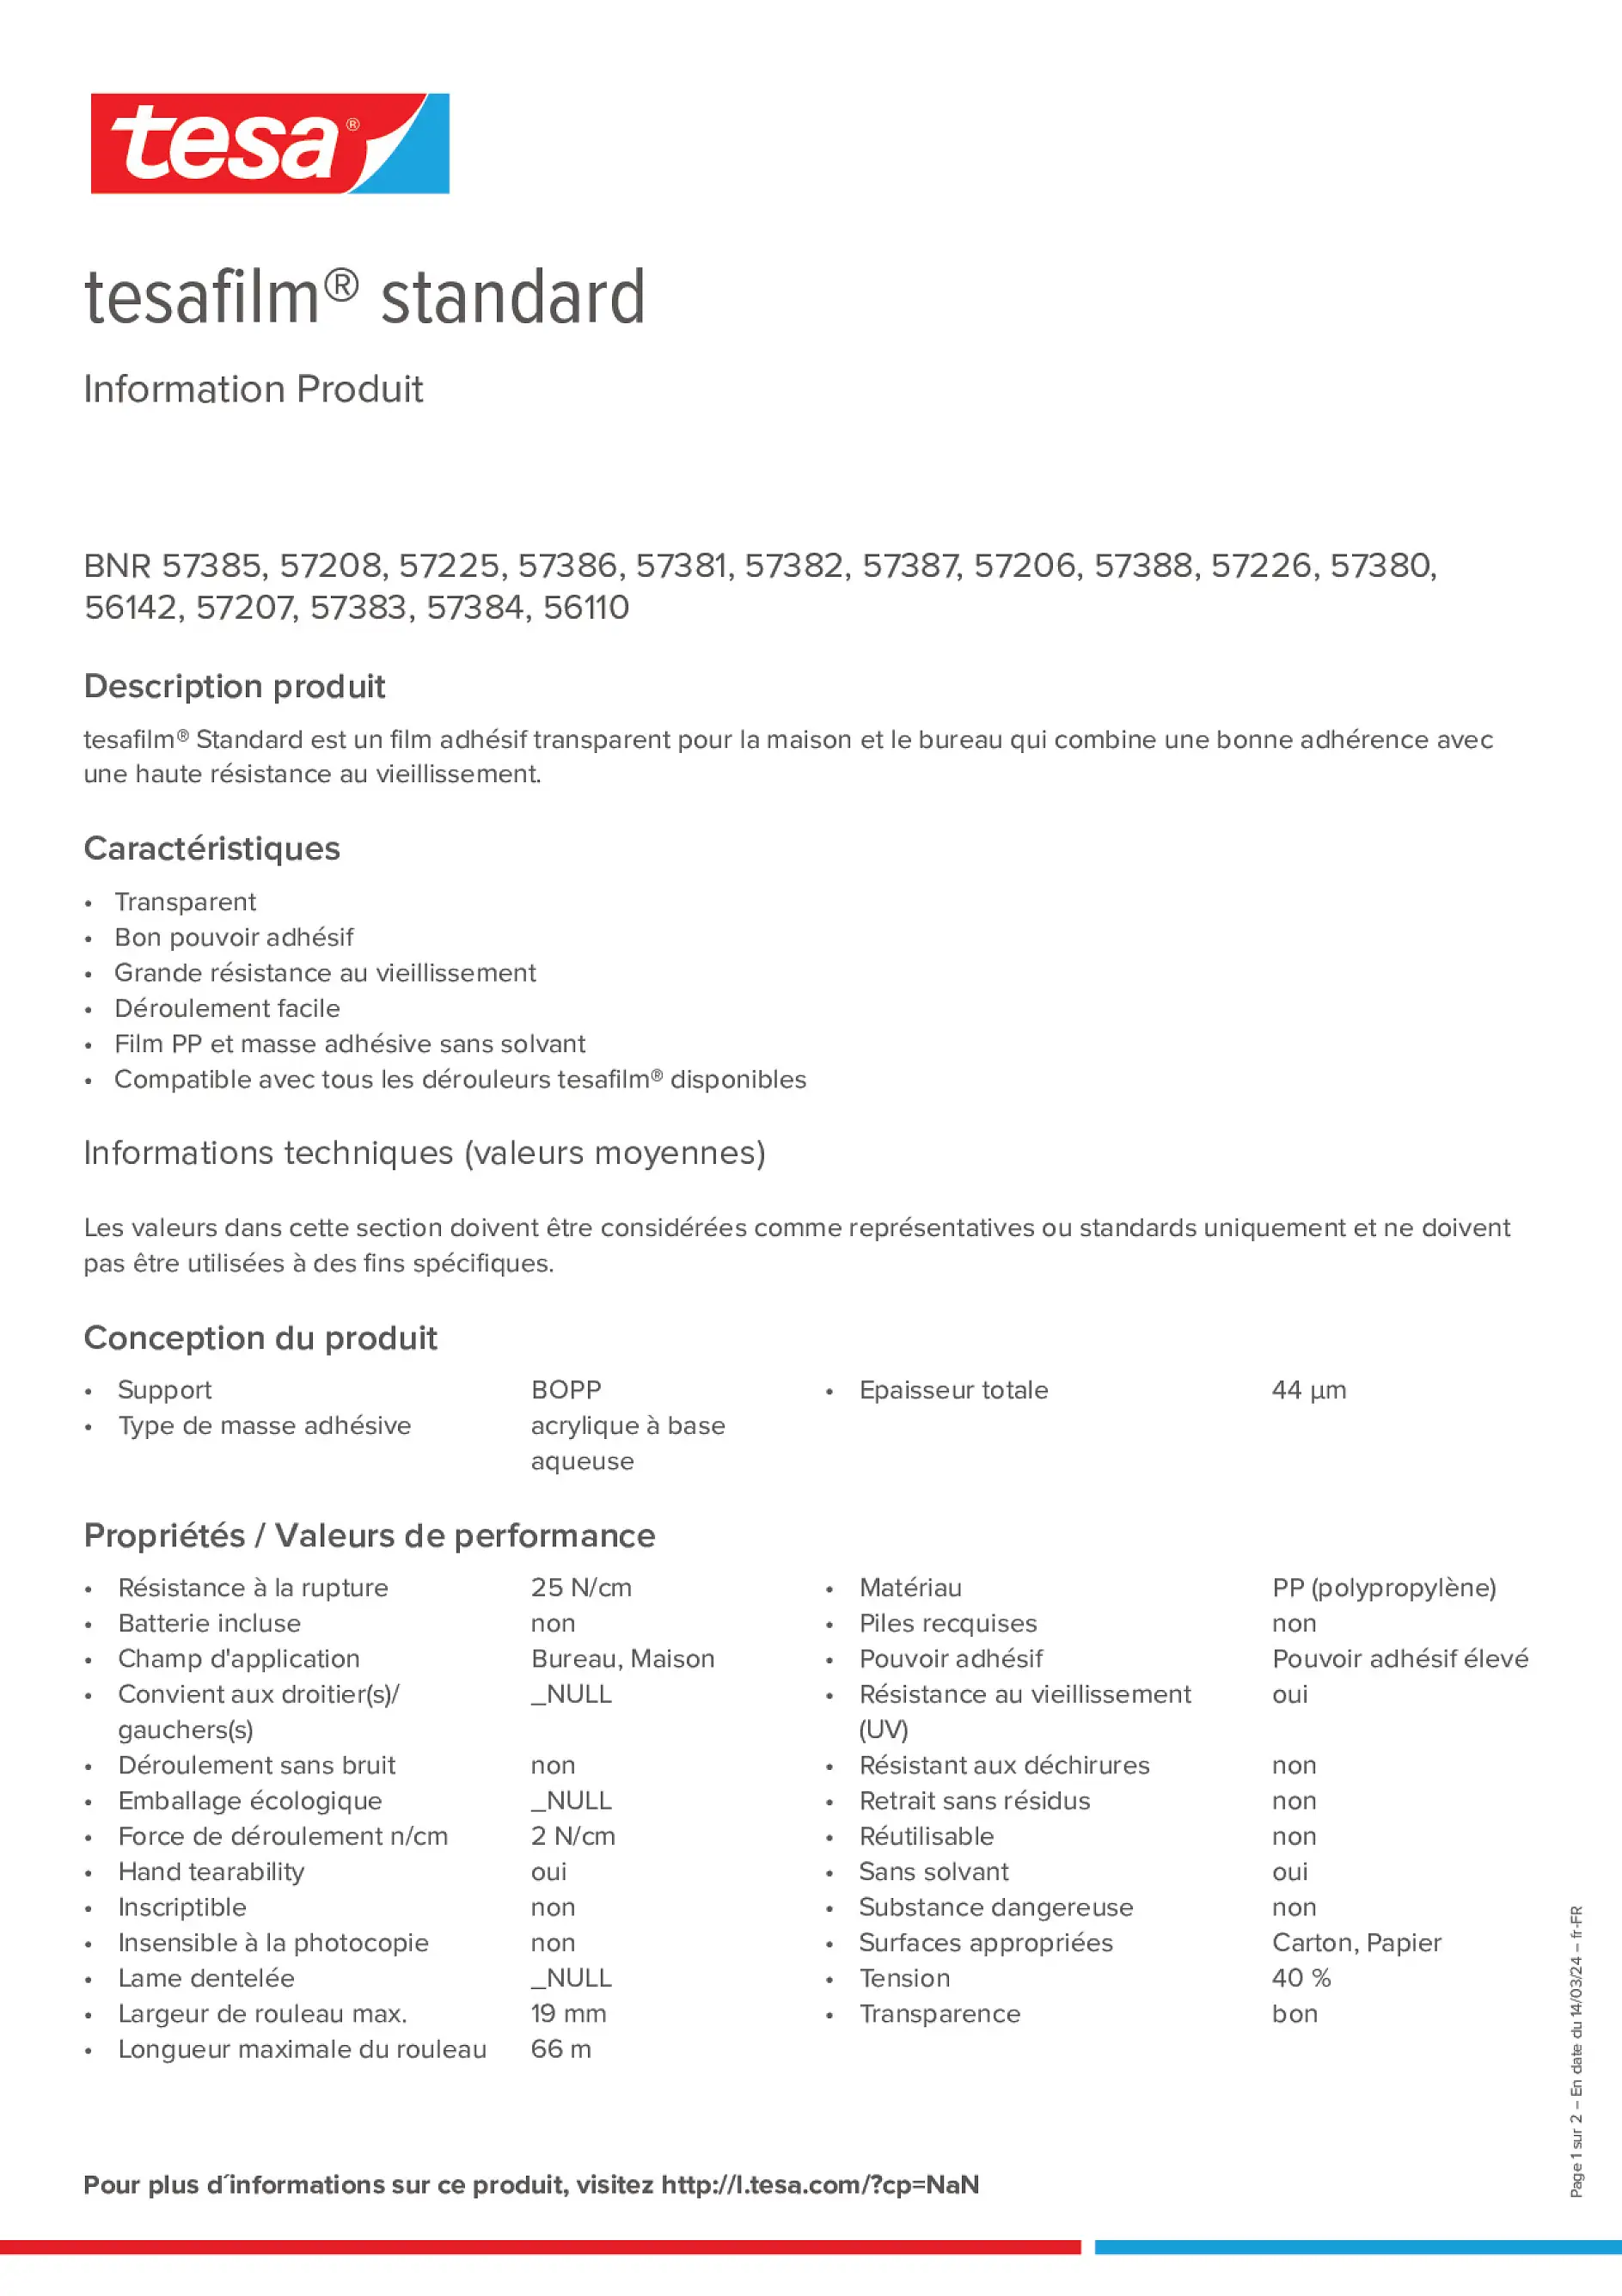 Product information_tesafilm® 57226_fr-FR